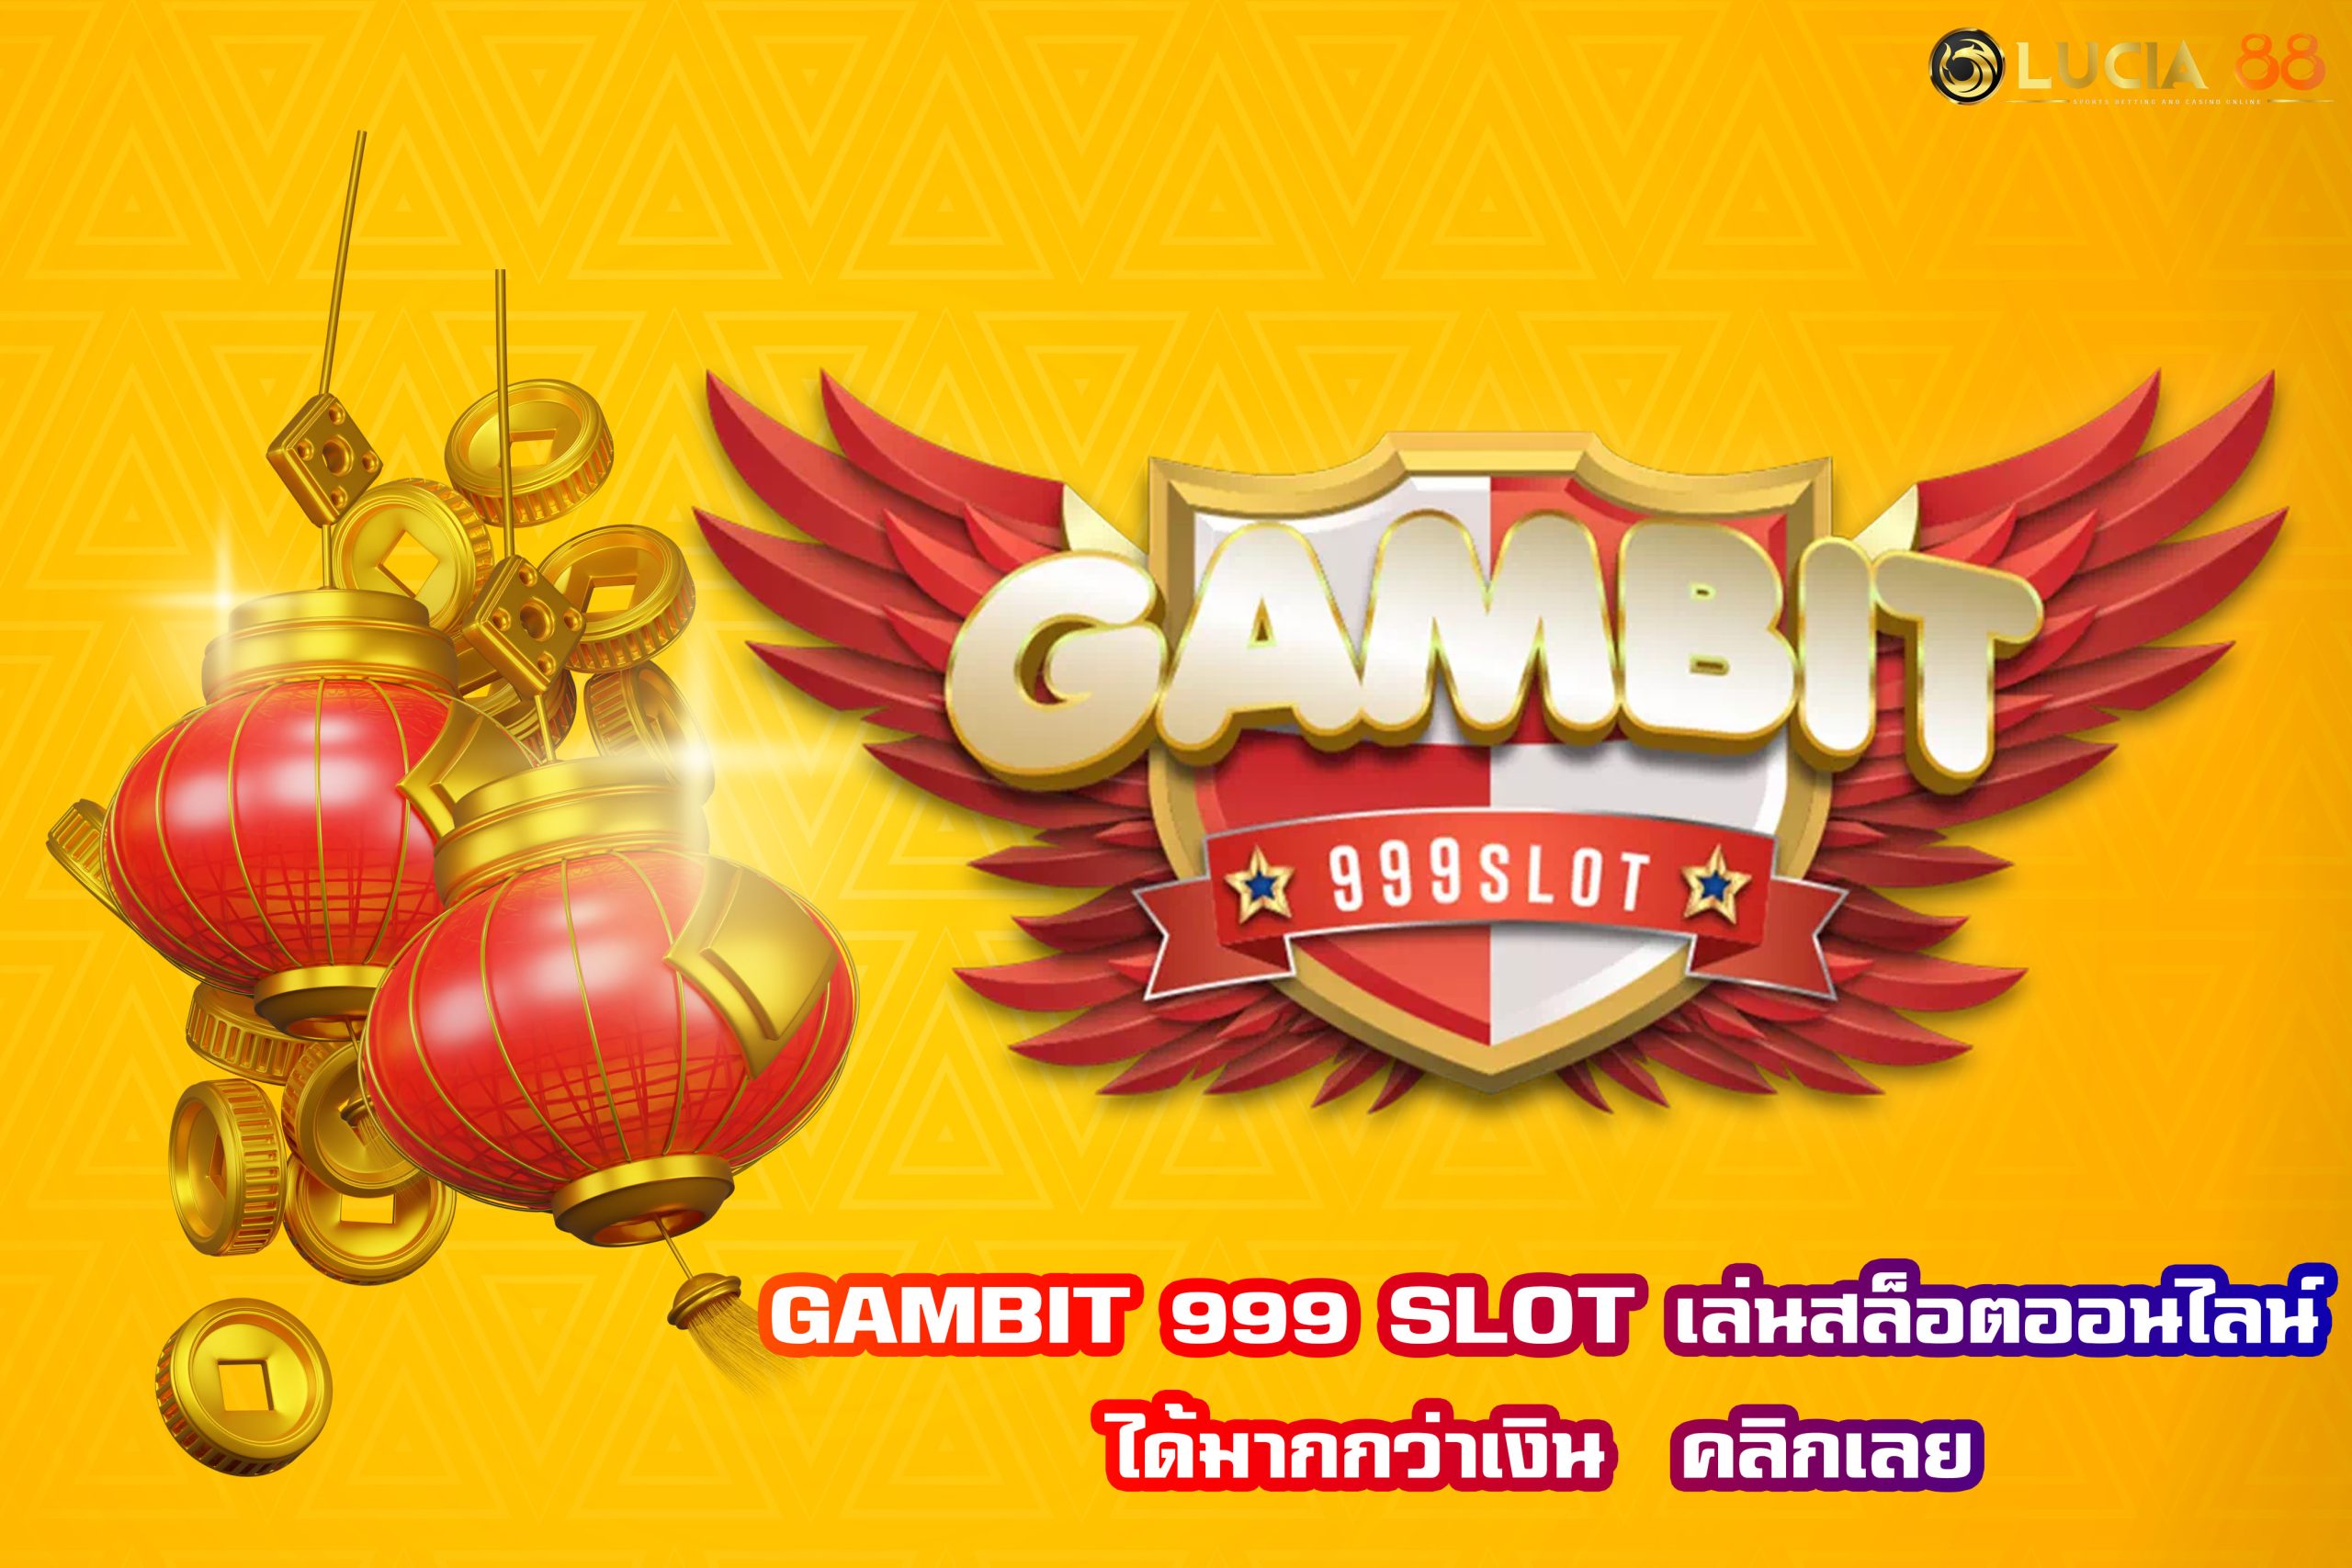 GAMBIT 999 SLOT เล่นสล็อตออนไลน์ได้มากกว่าเงิน  คลิกเลย